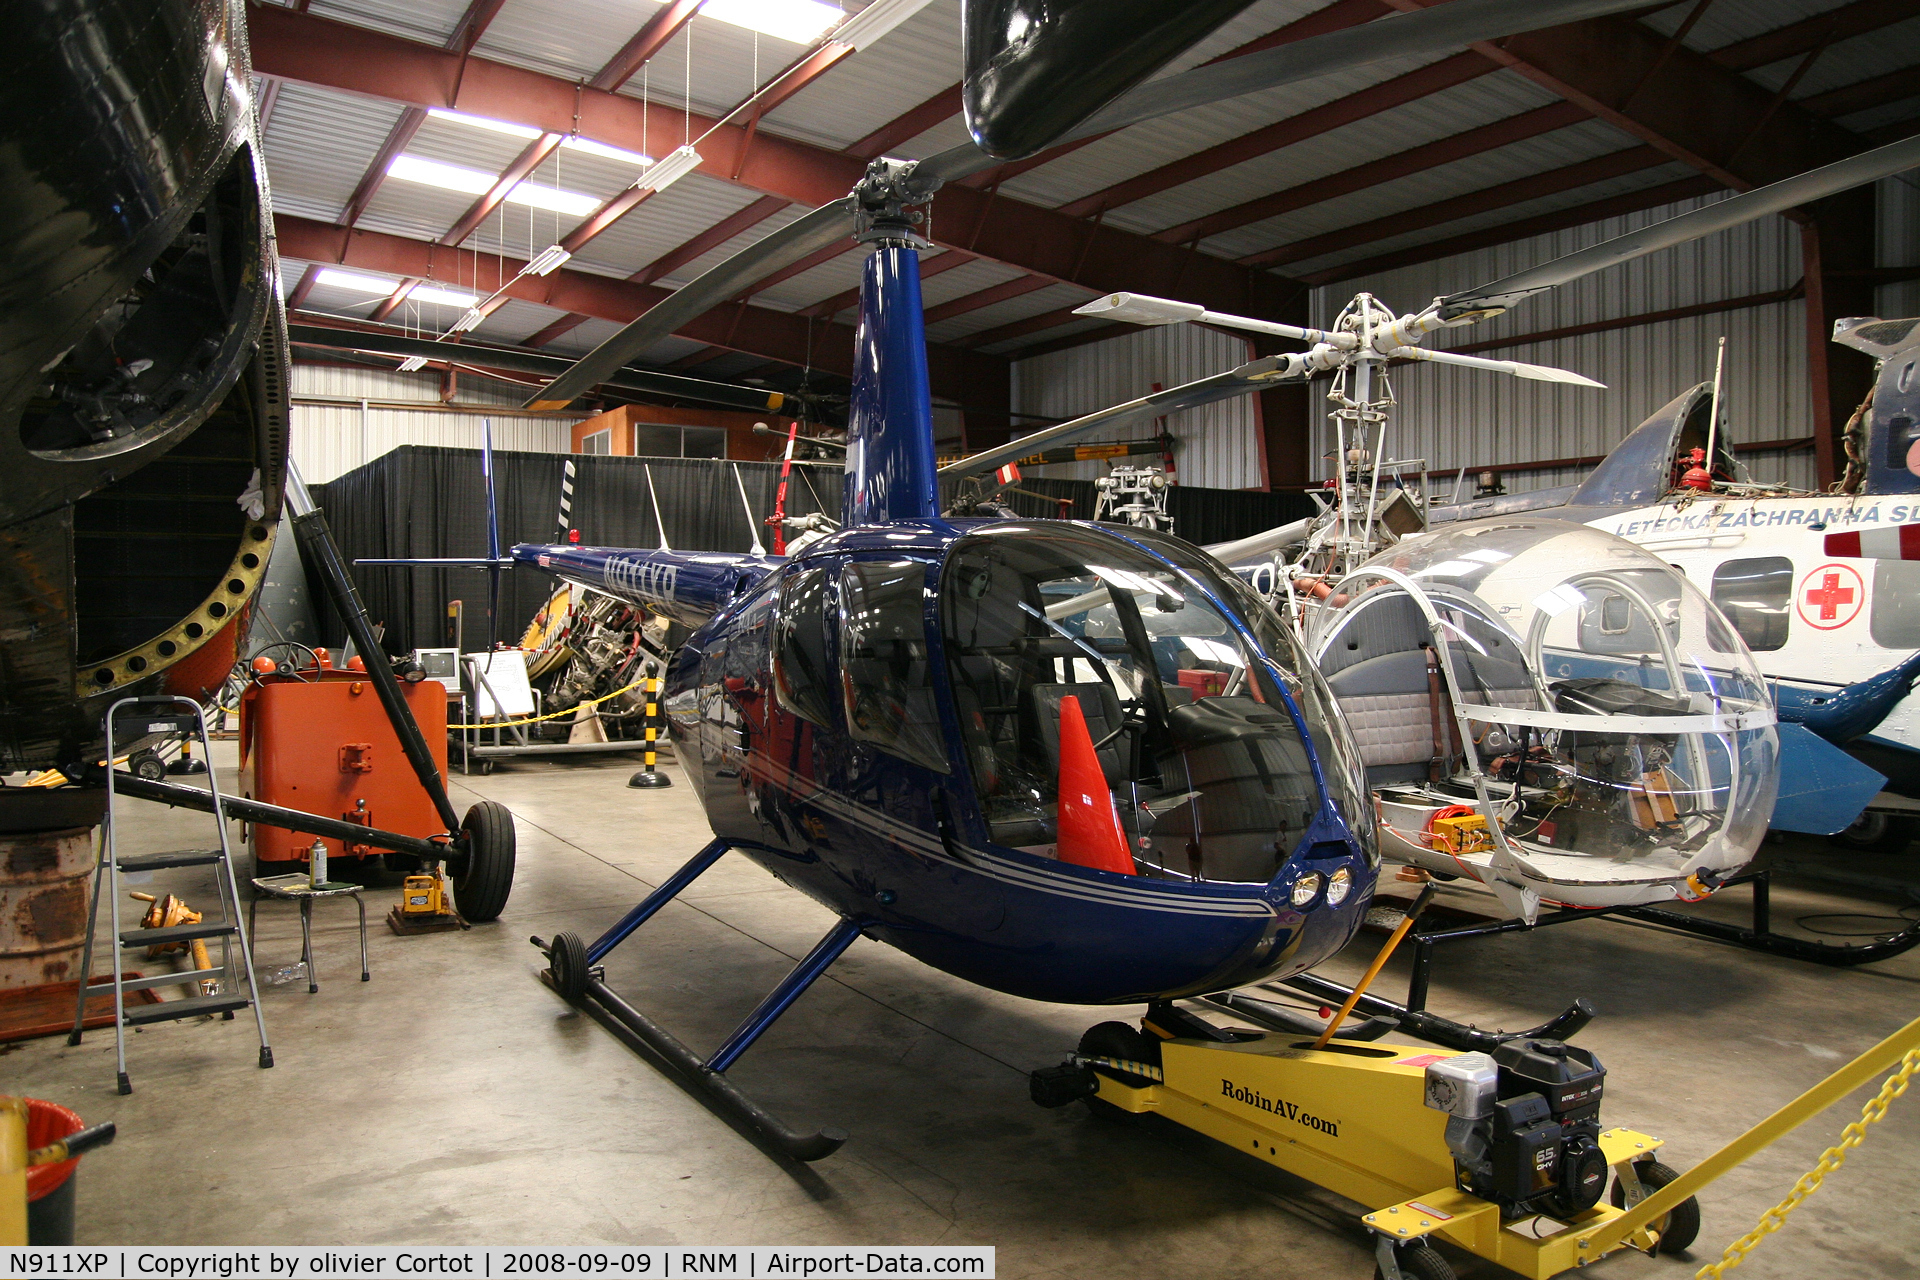 N911XP, 2003 Robinson R44 II C/N 10064, Ramona museum of helicopters